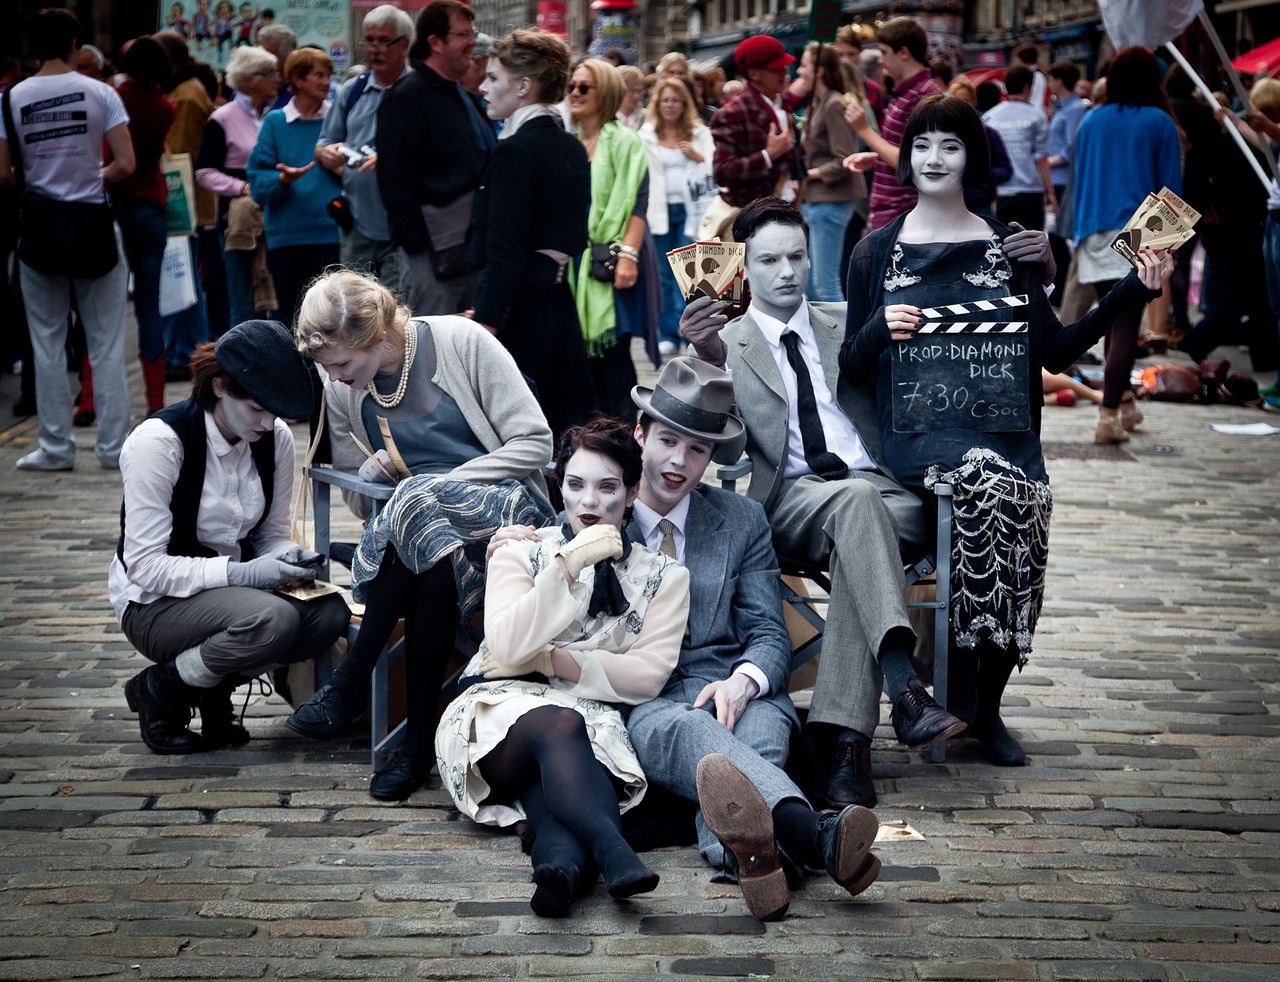 street performers edinburgh fringe actors free photo